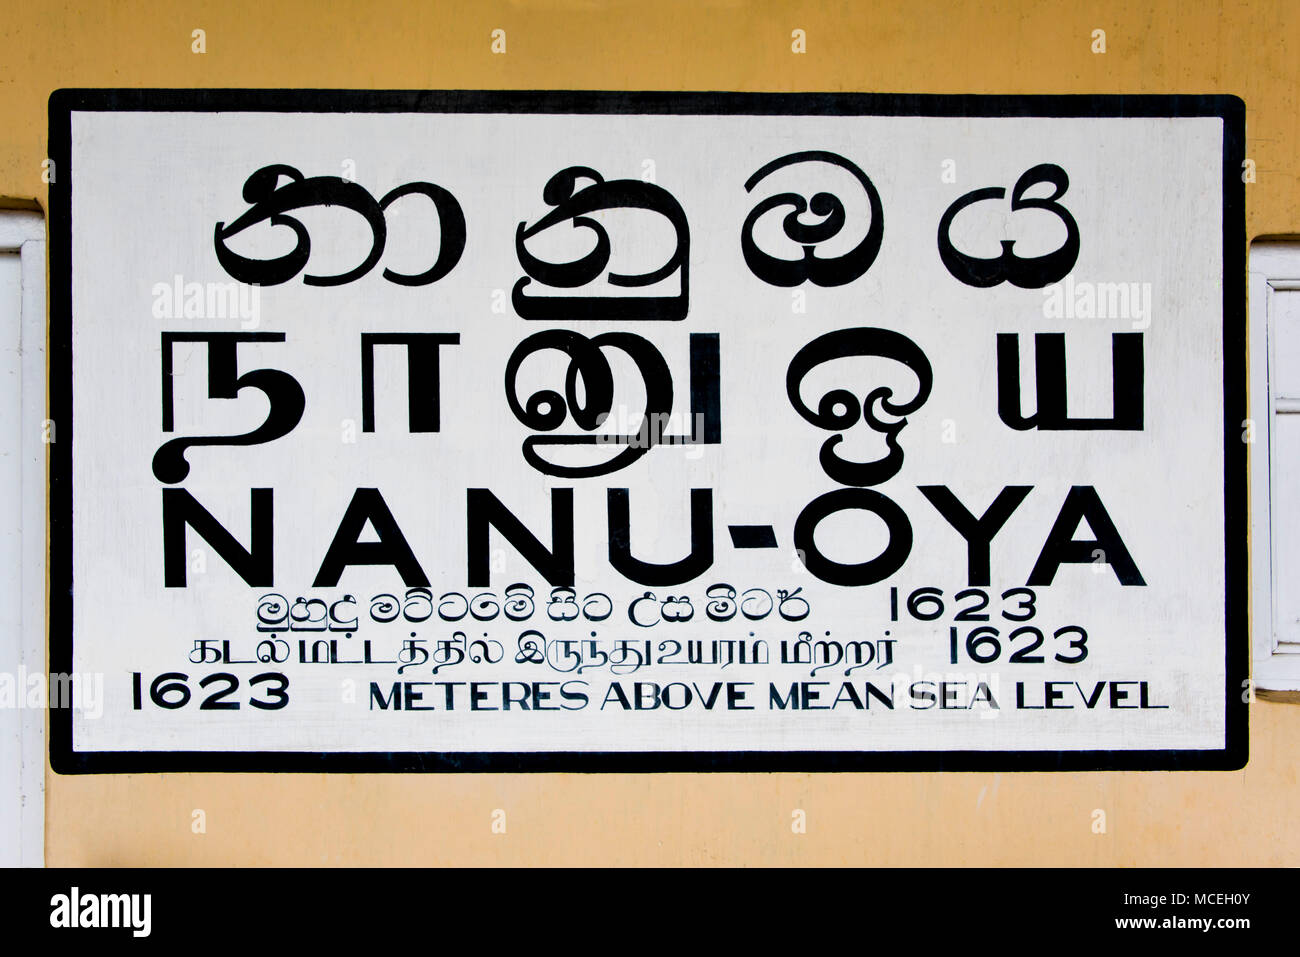 Horizontale Ansicht der handgemaltes Schild am Nanu - oya Bahnhof im Hochland von Sri Lanka. Stockfoto